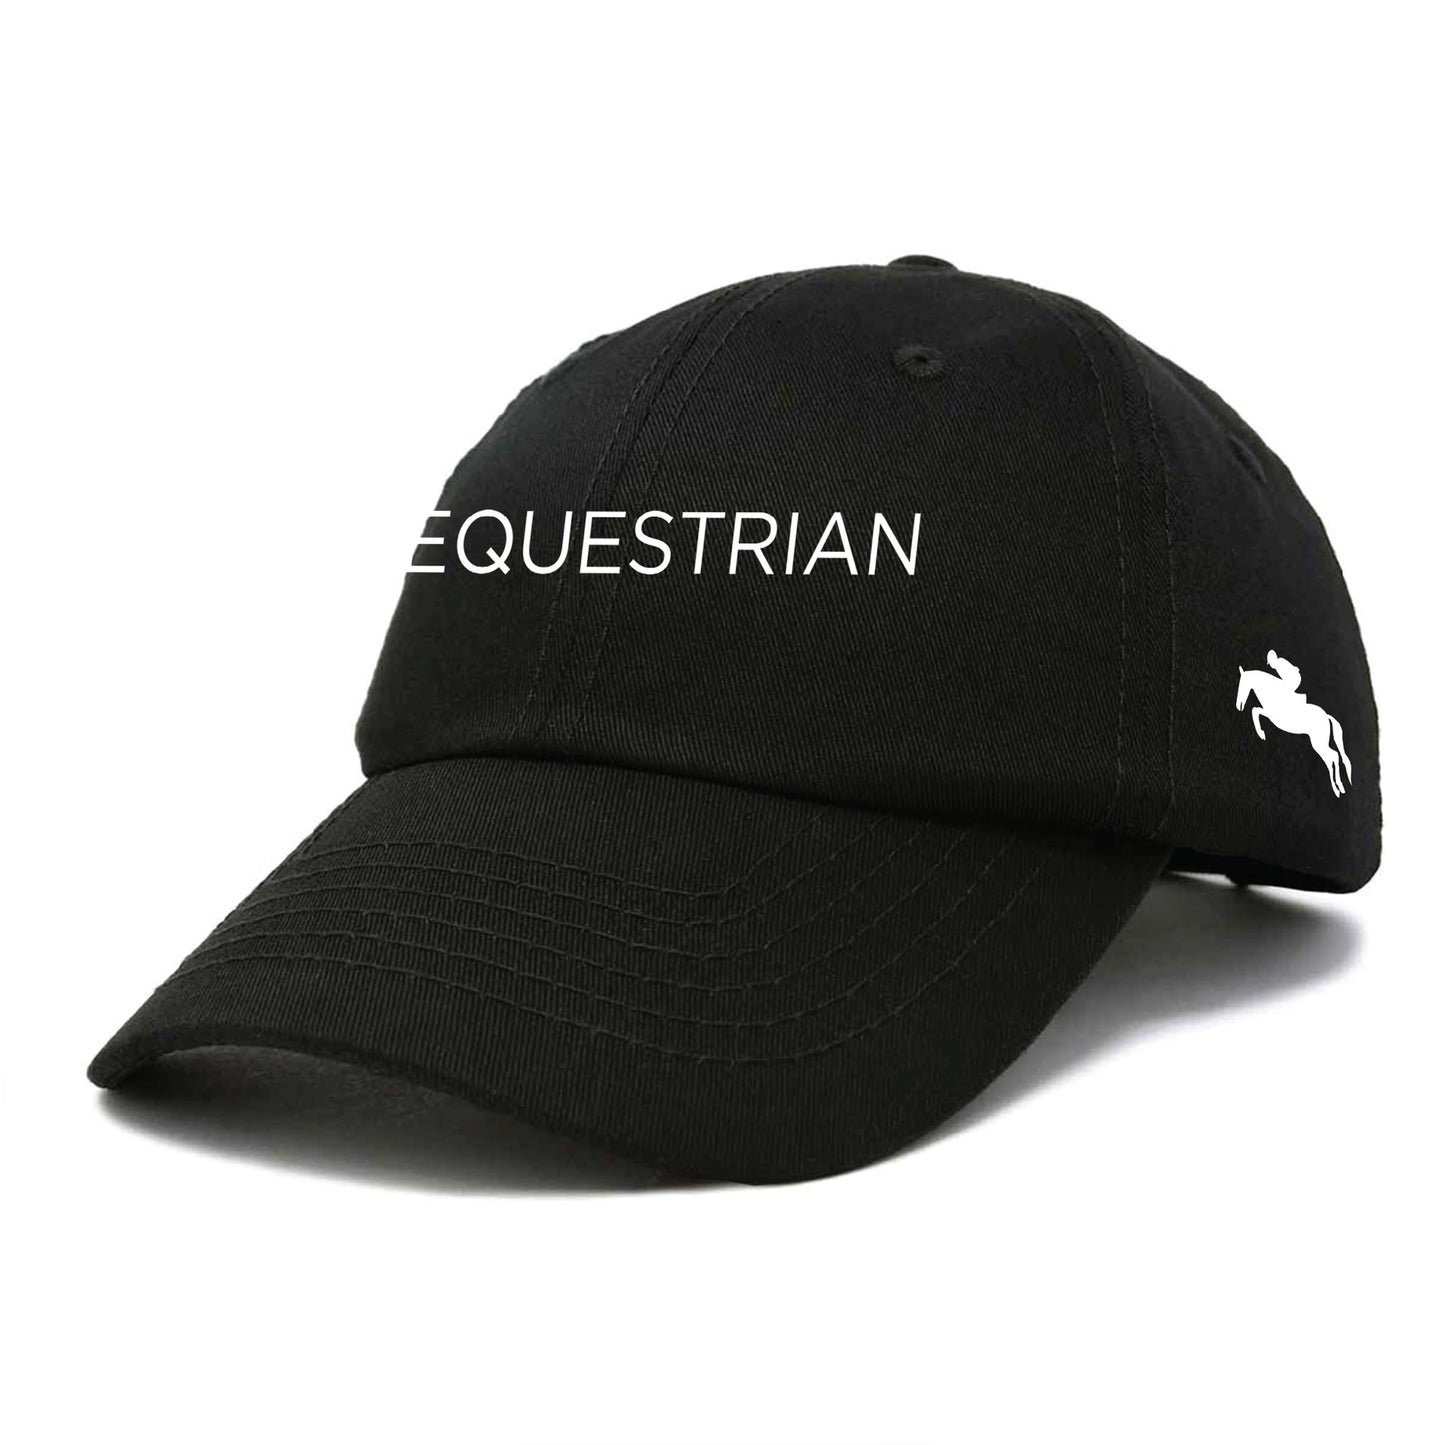 DALIX Equestrian Embroidered Cap